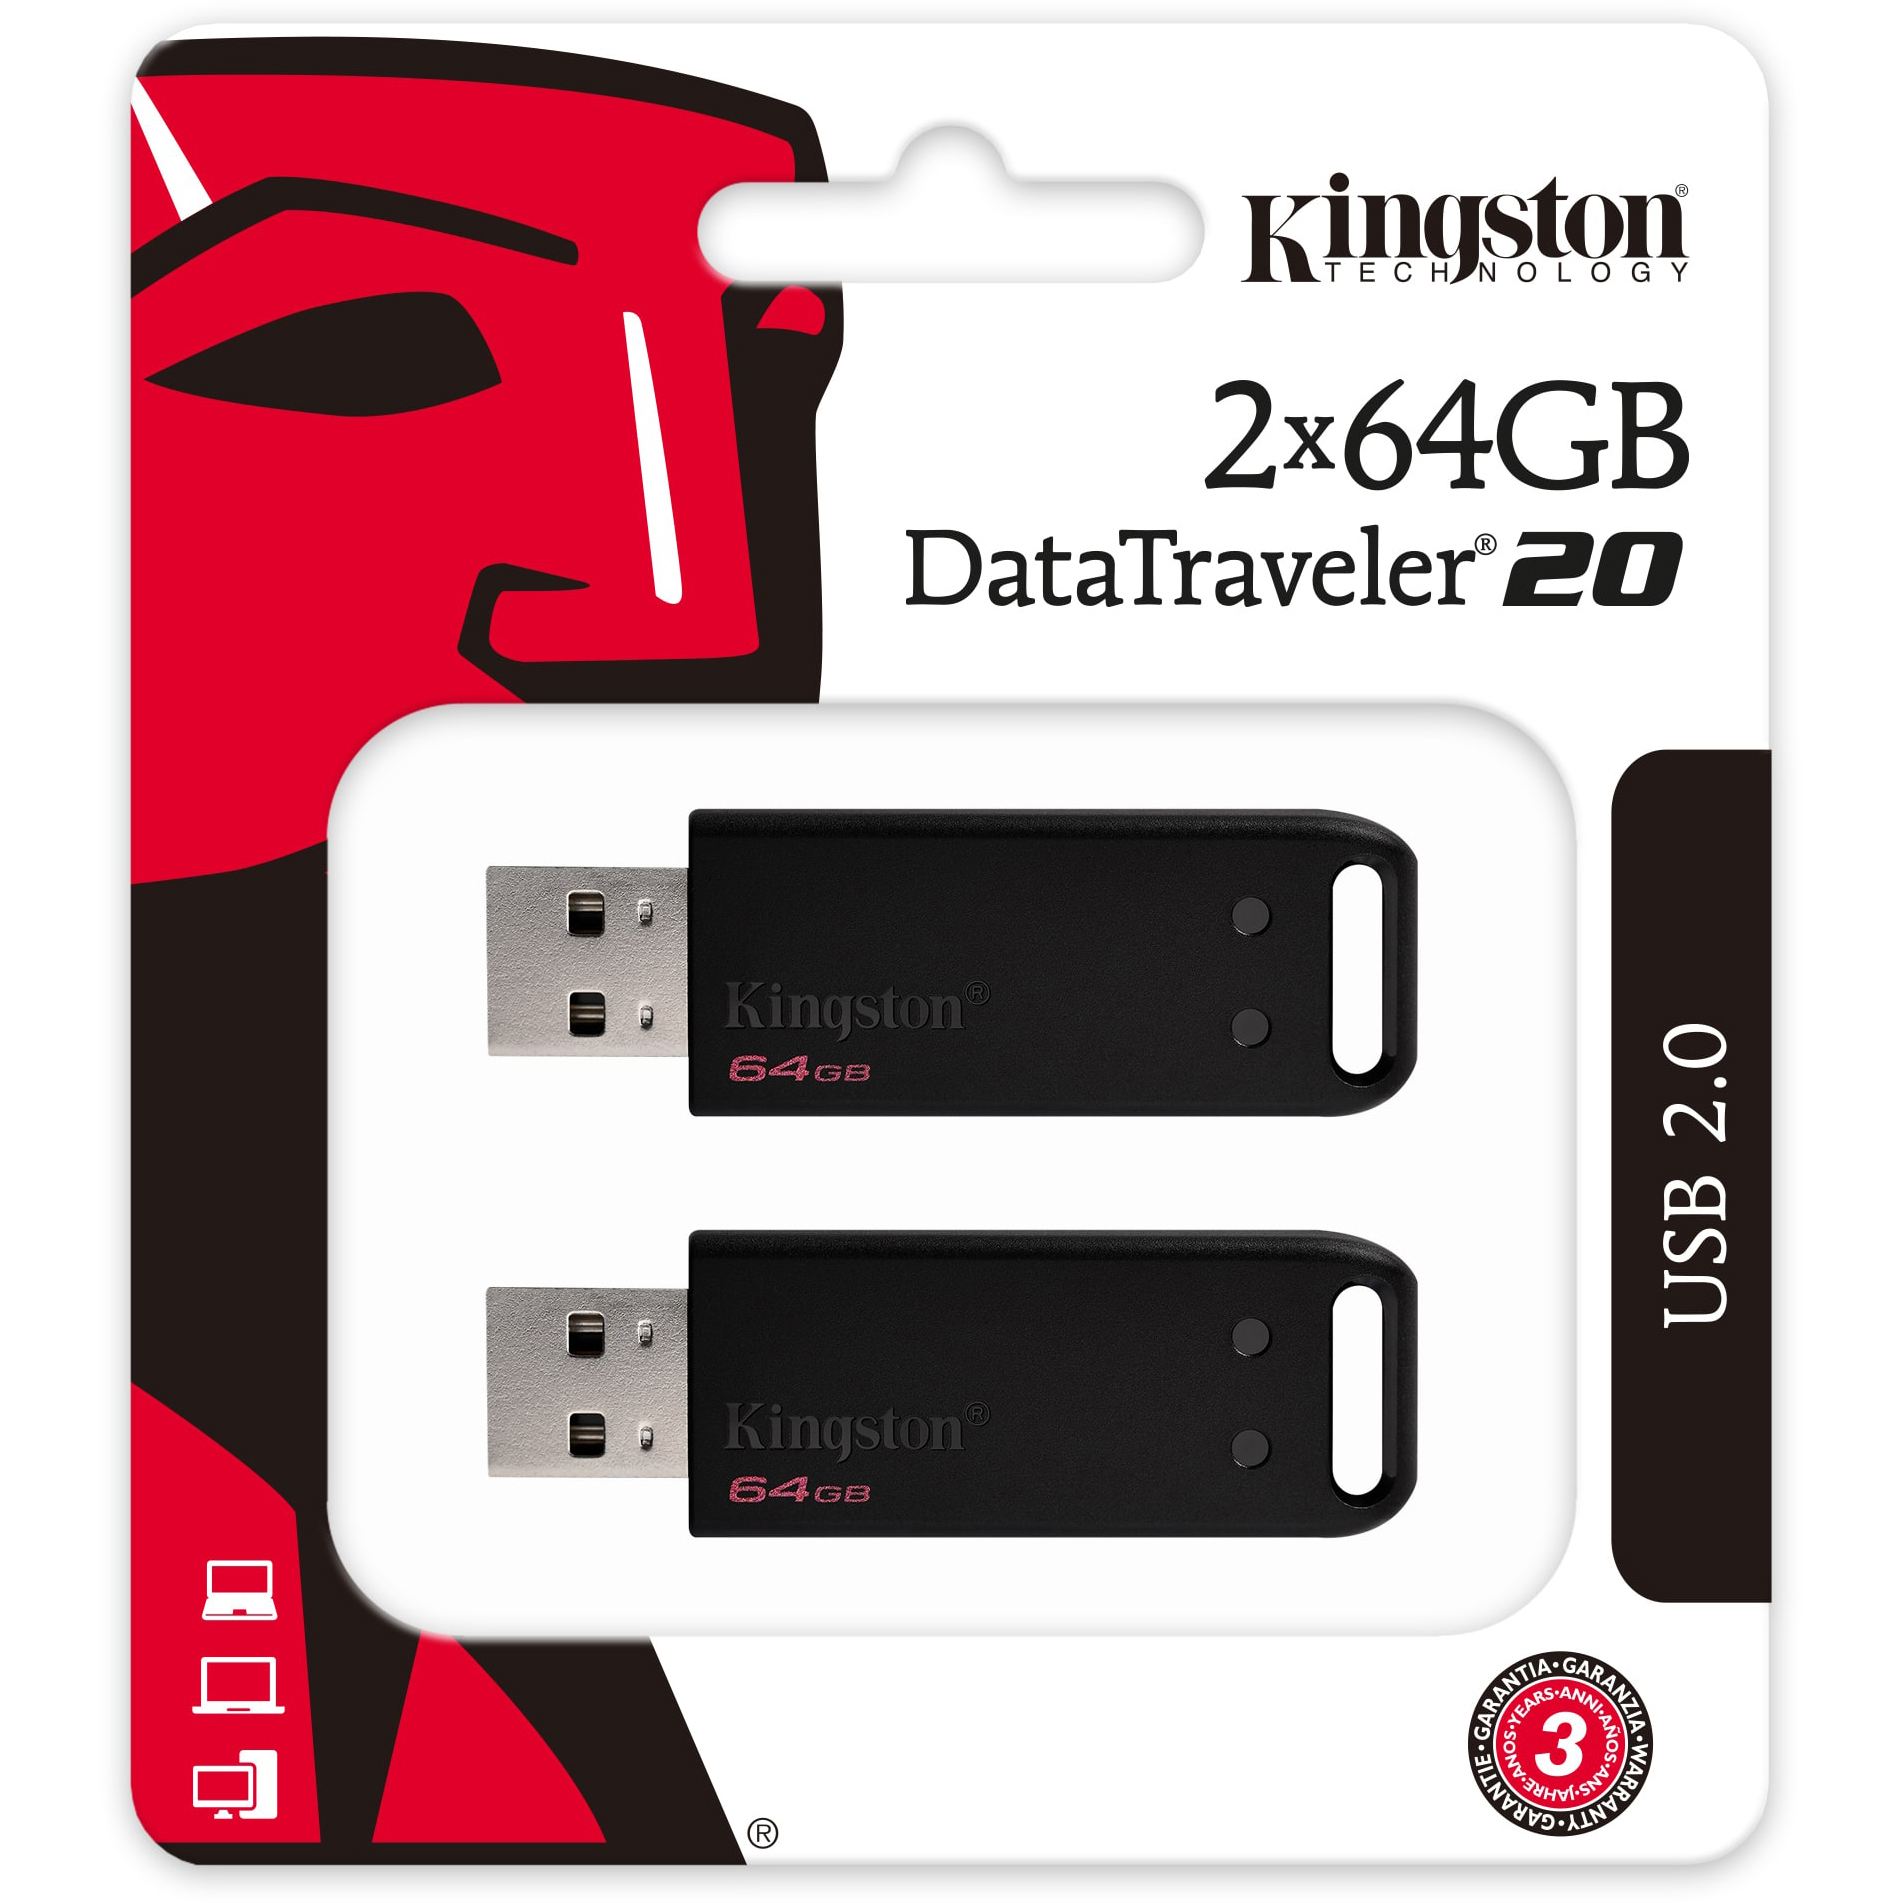 Original Kingston 64GB DataTraveler 20 USB 2.0 Flash Drive 2-Pack (DT20/64GB-2P)